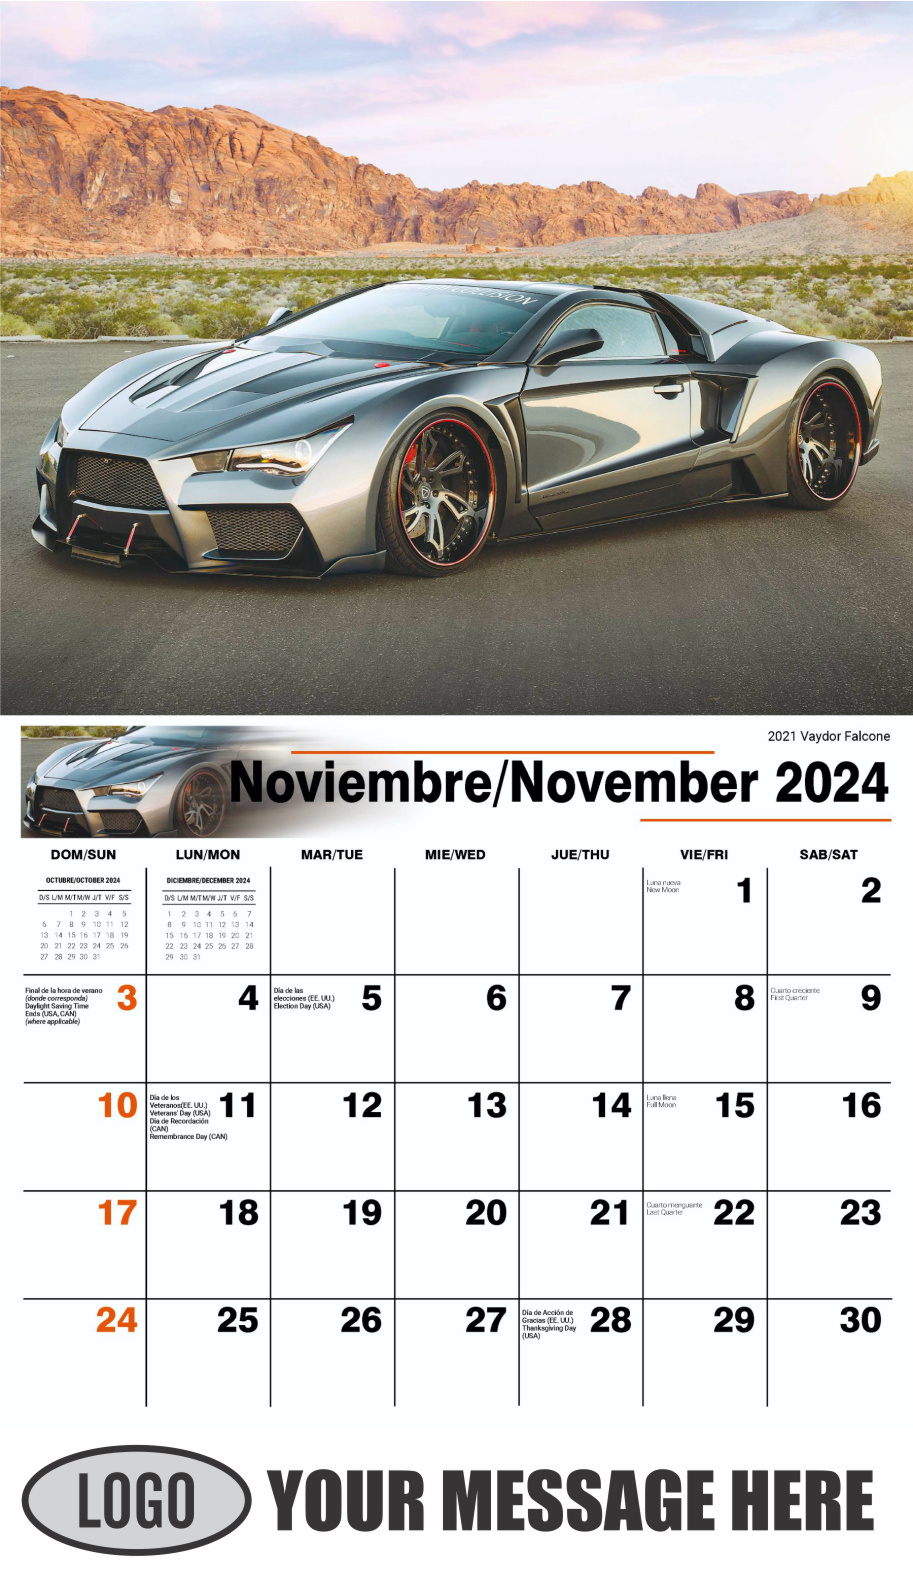 Exotic Cars 2024 Bilingual Automotive Business Promotional Calendar - November